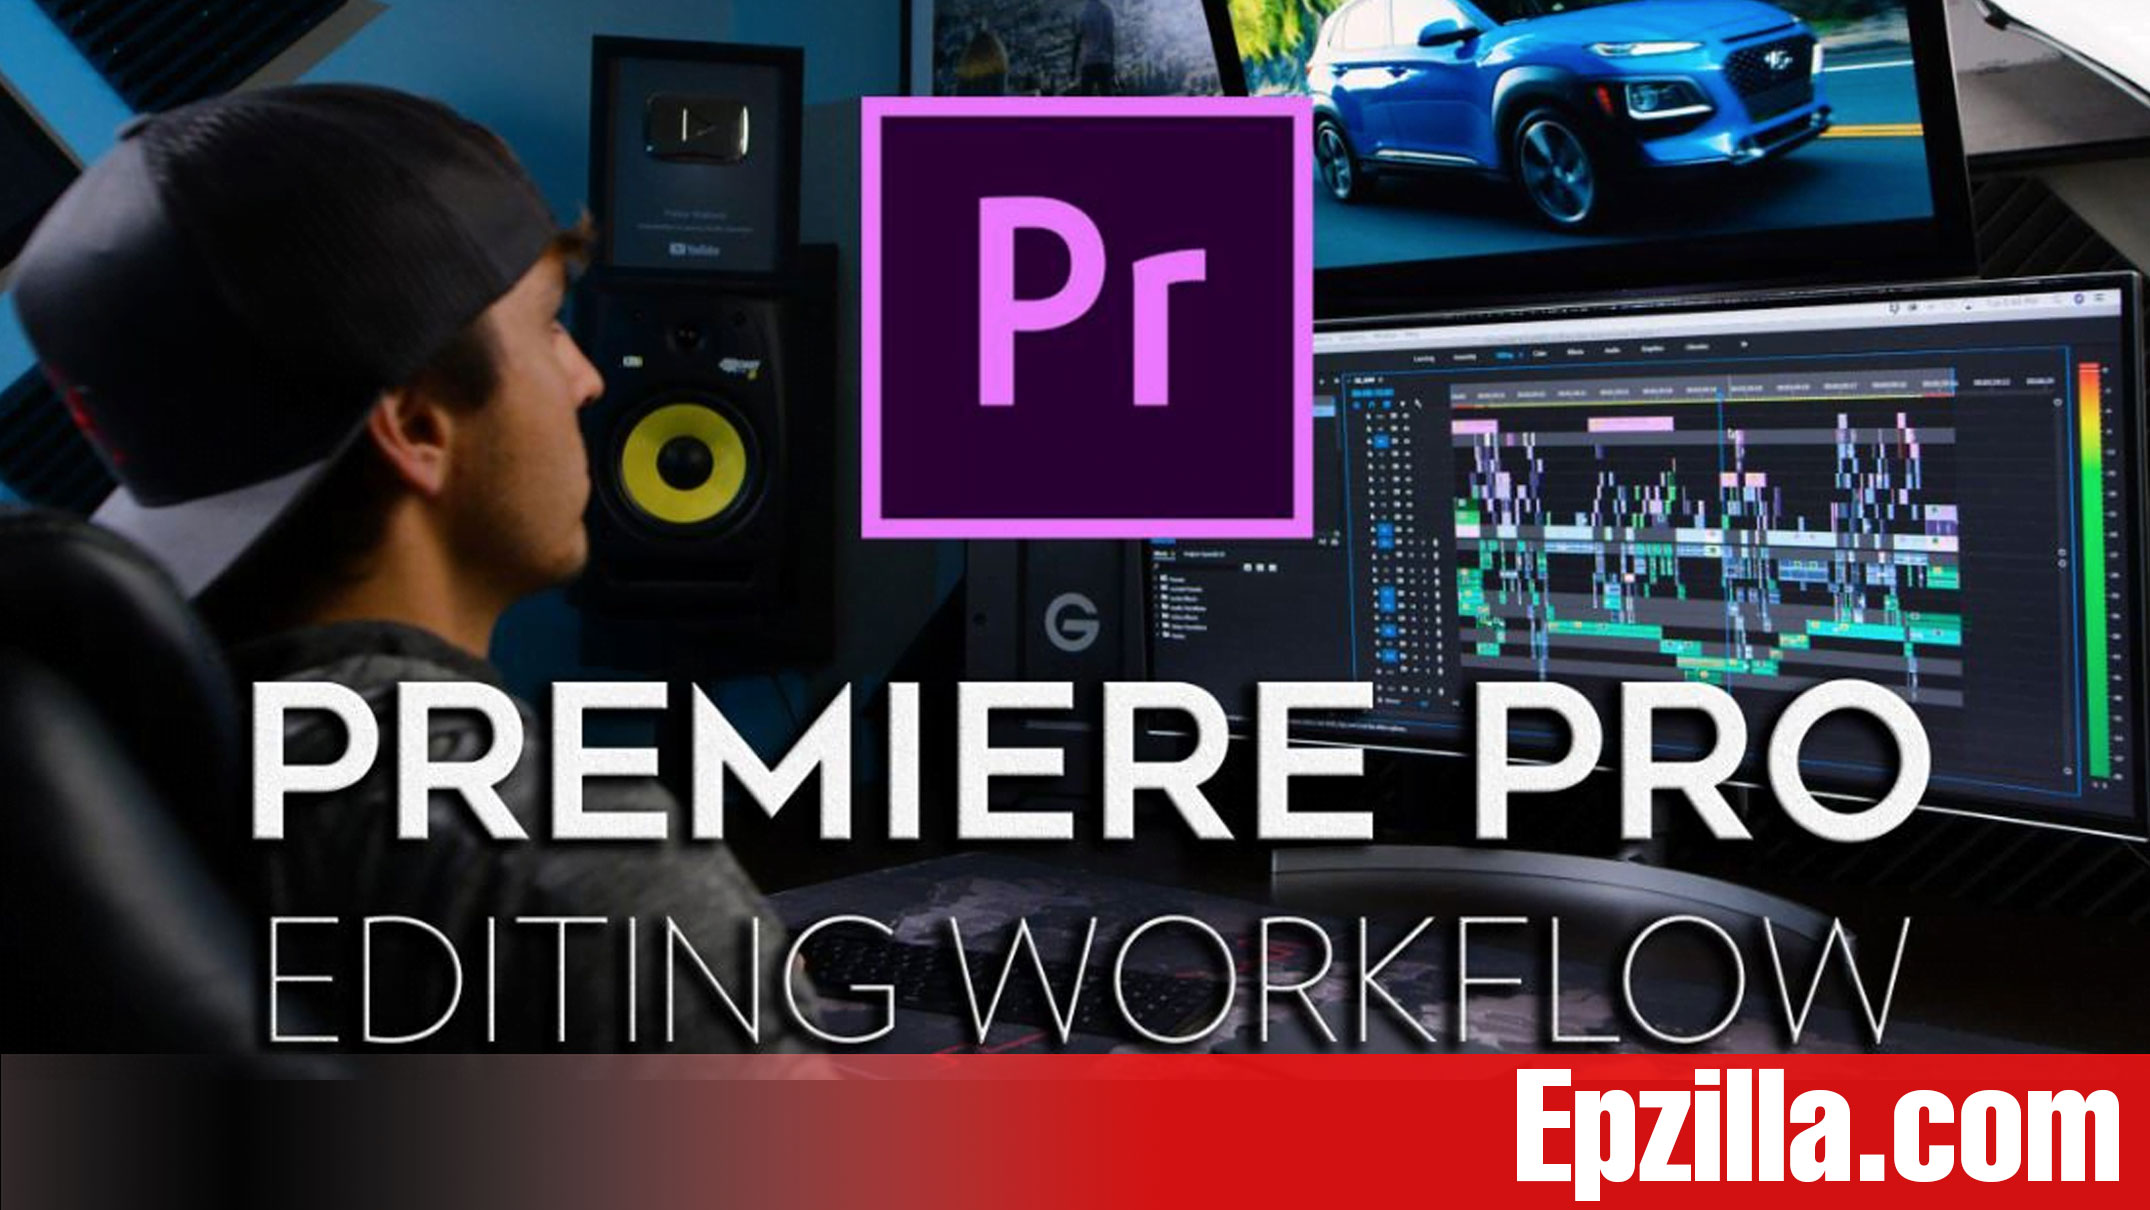 FullTime Filmmaker Premiere Pro Editing Workflow Free Download Epzilla.com